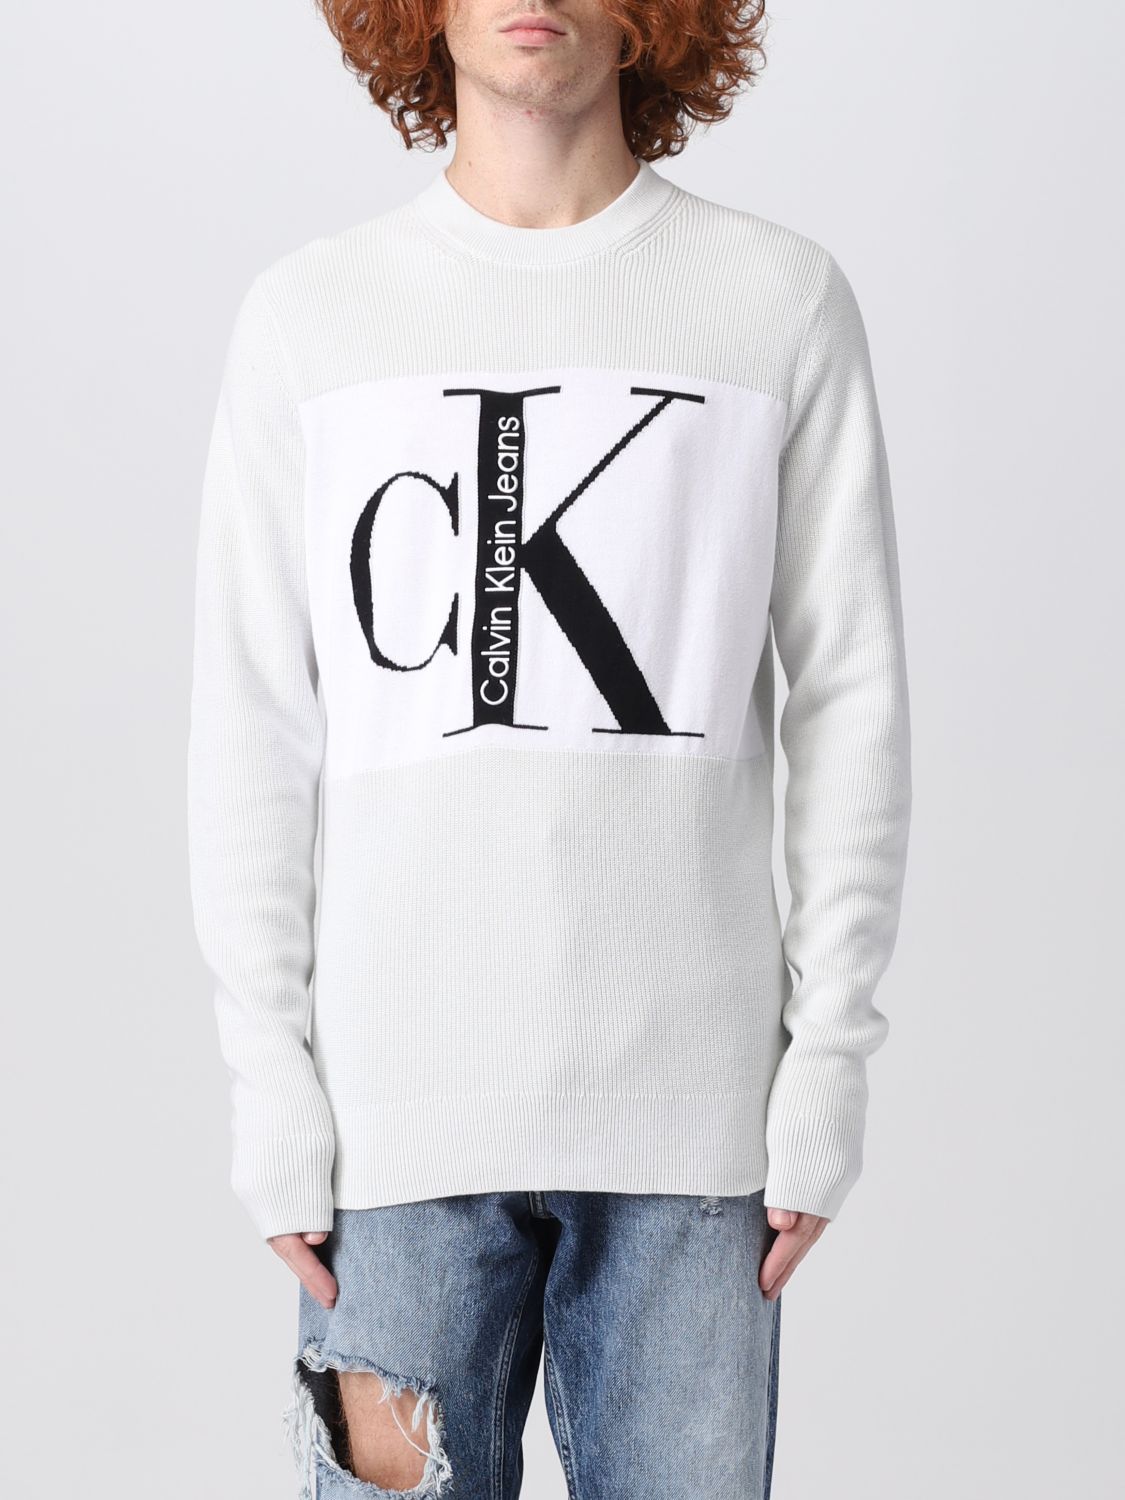 CALVIN KLEIN JEANS: sweater for man - Grey | Calvin Klein Jeans sweater ...